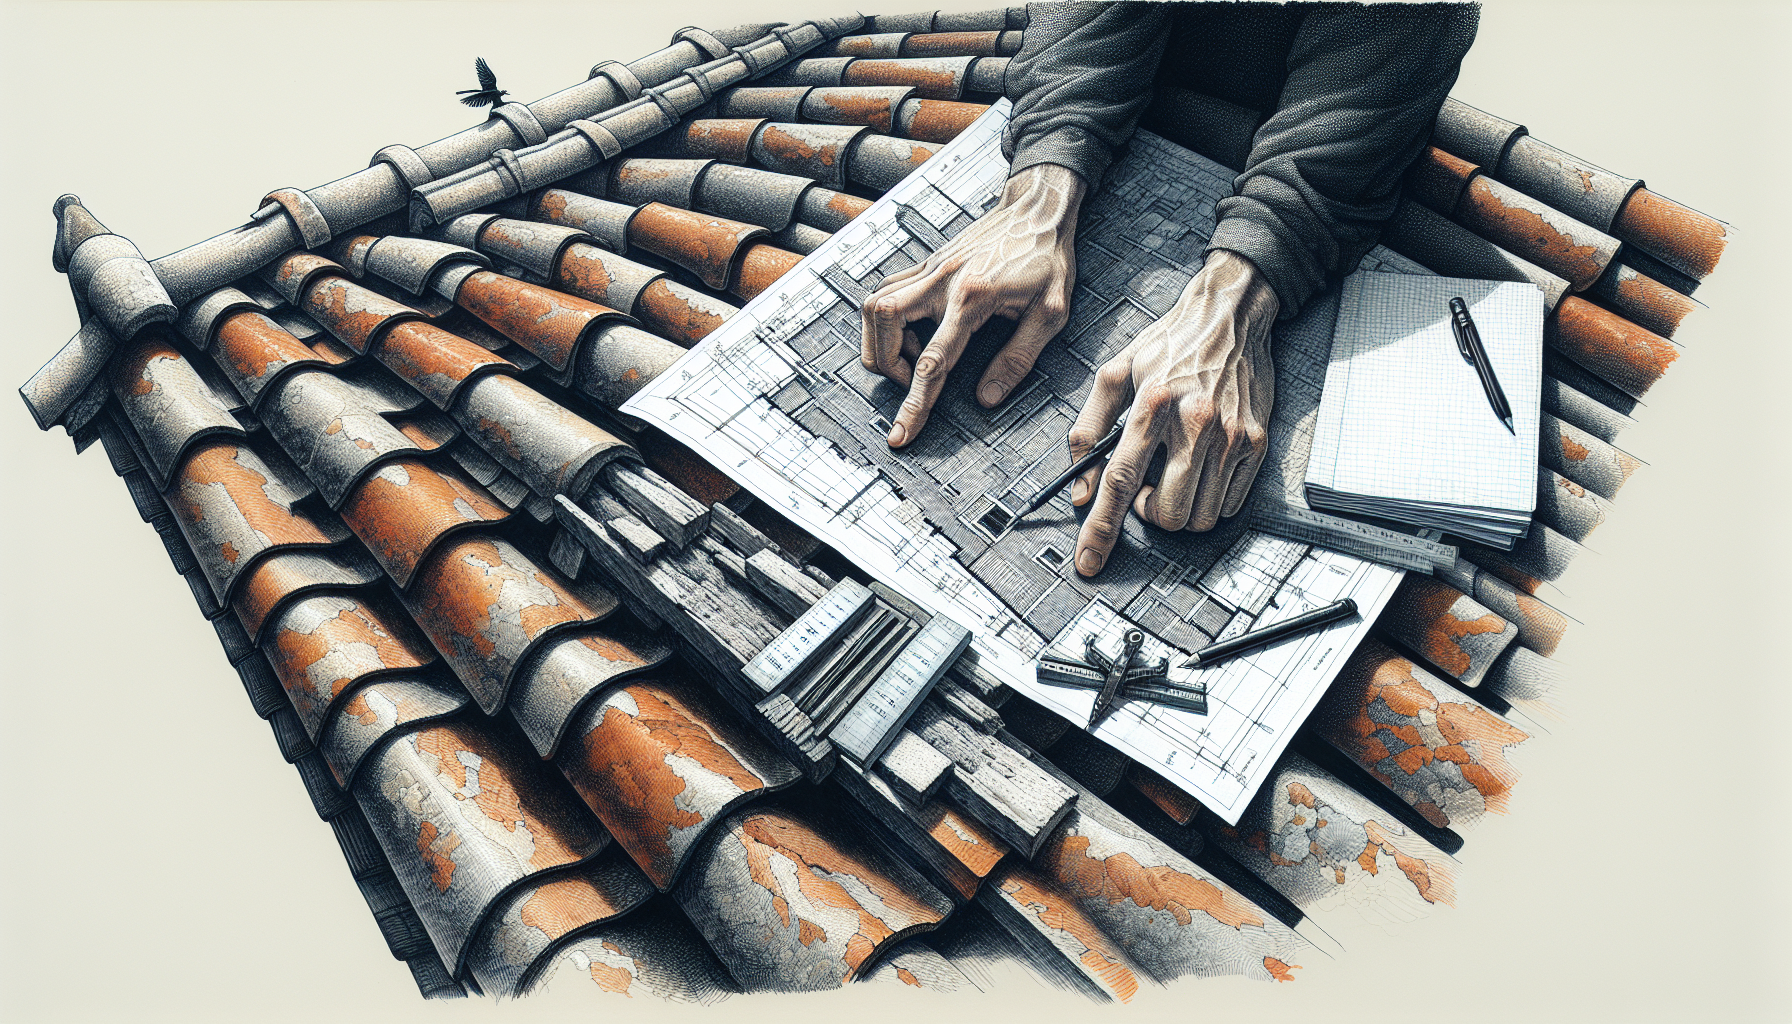 Tragfähigkeit des Daches prüfen - erster Schritt zum Dachgeschossausbau